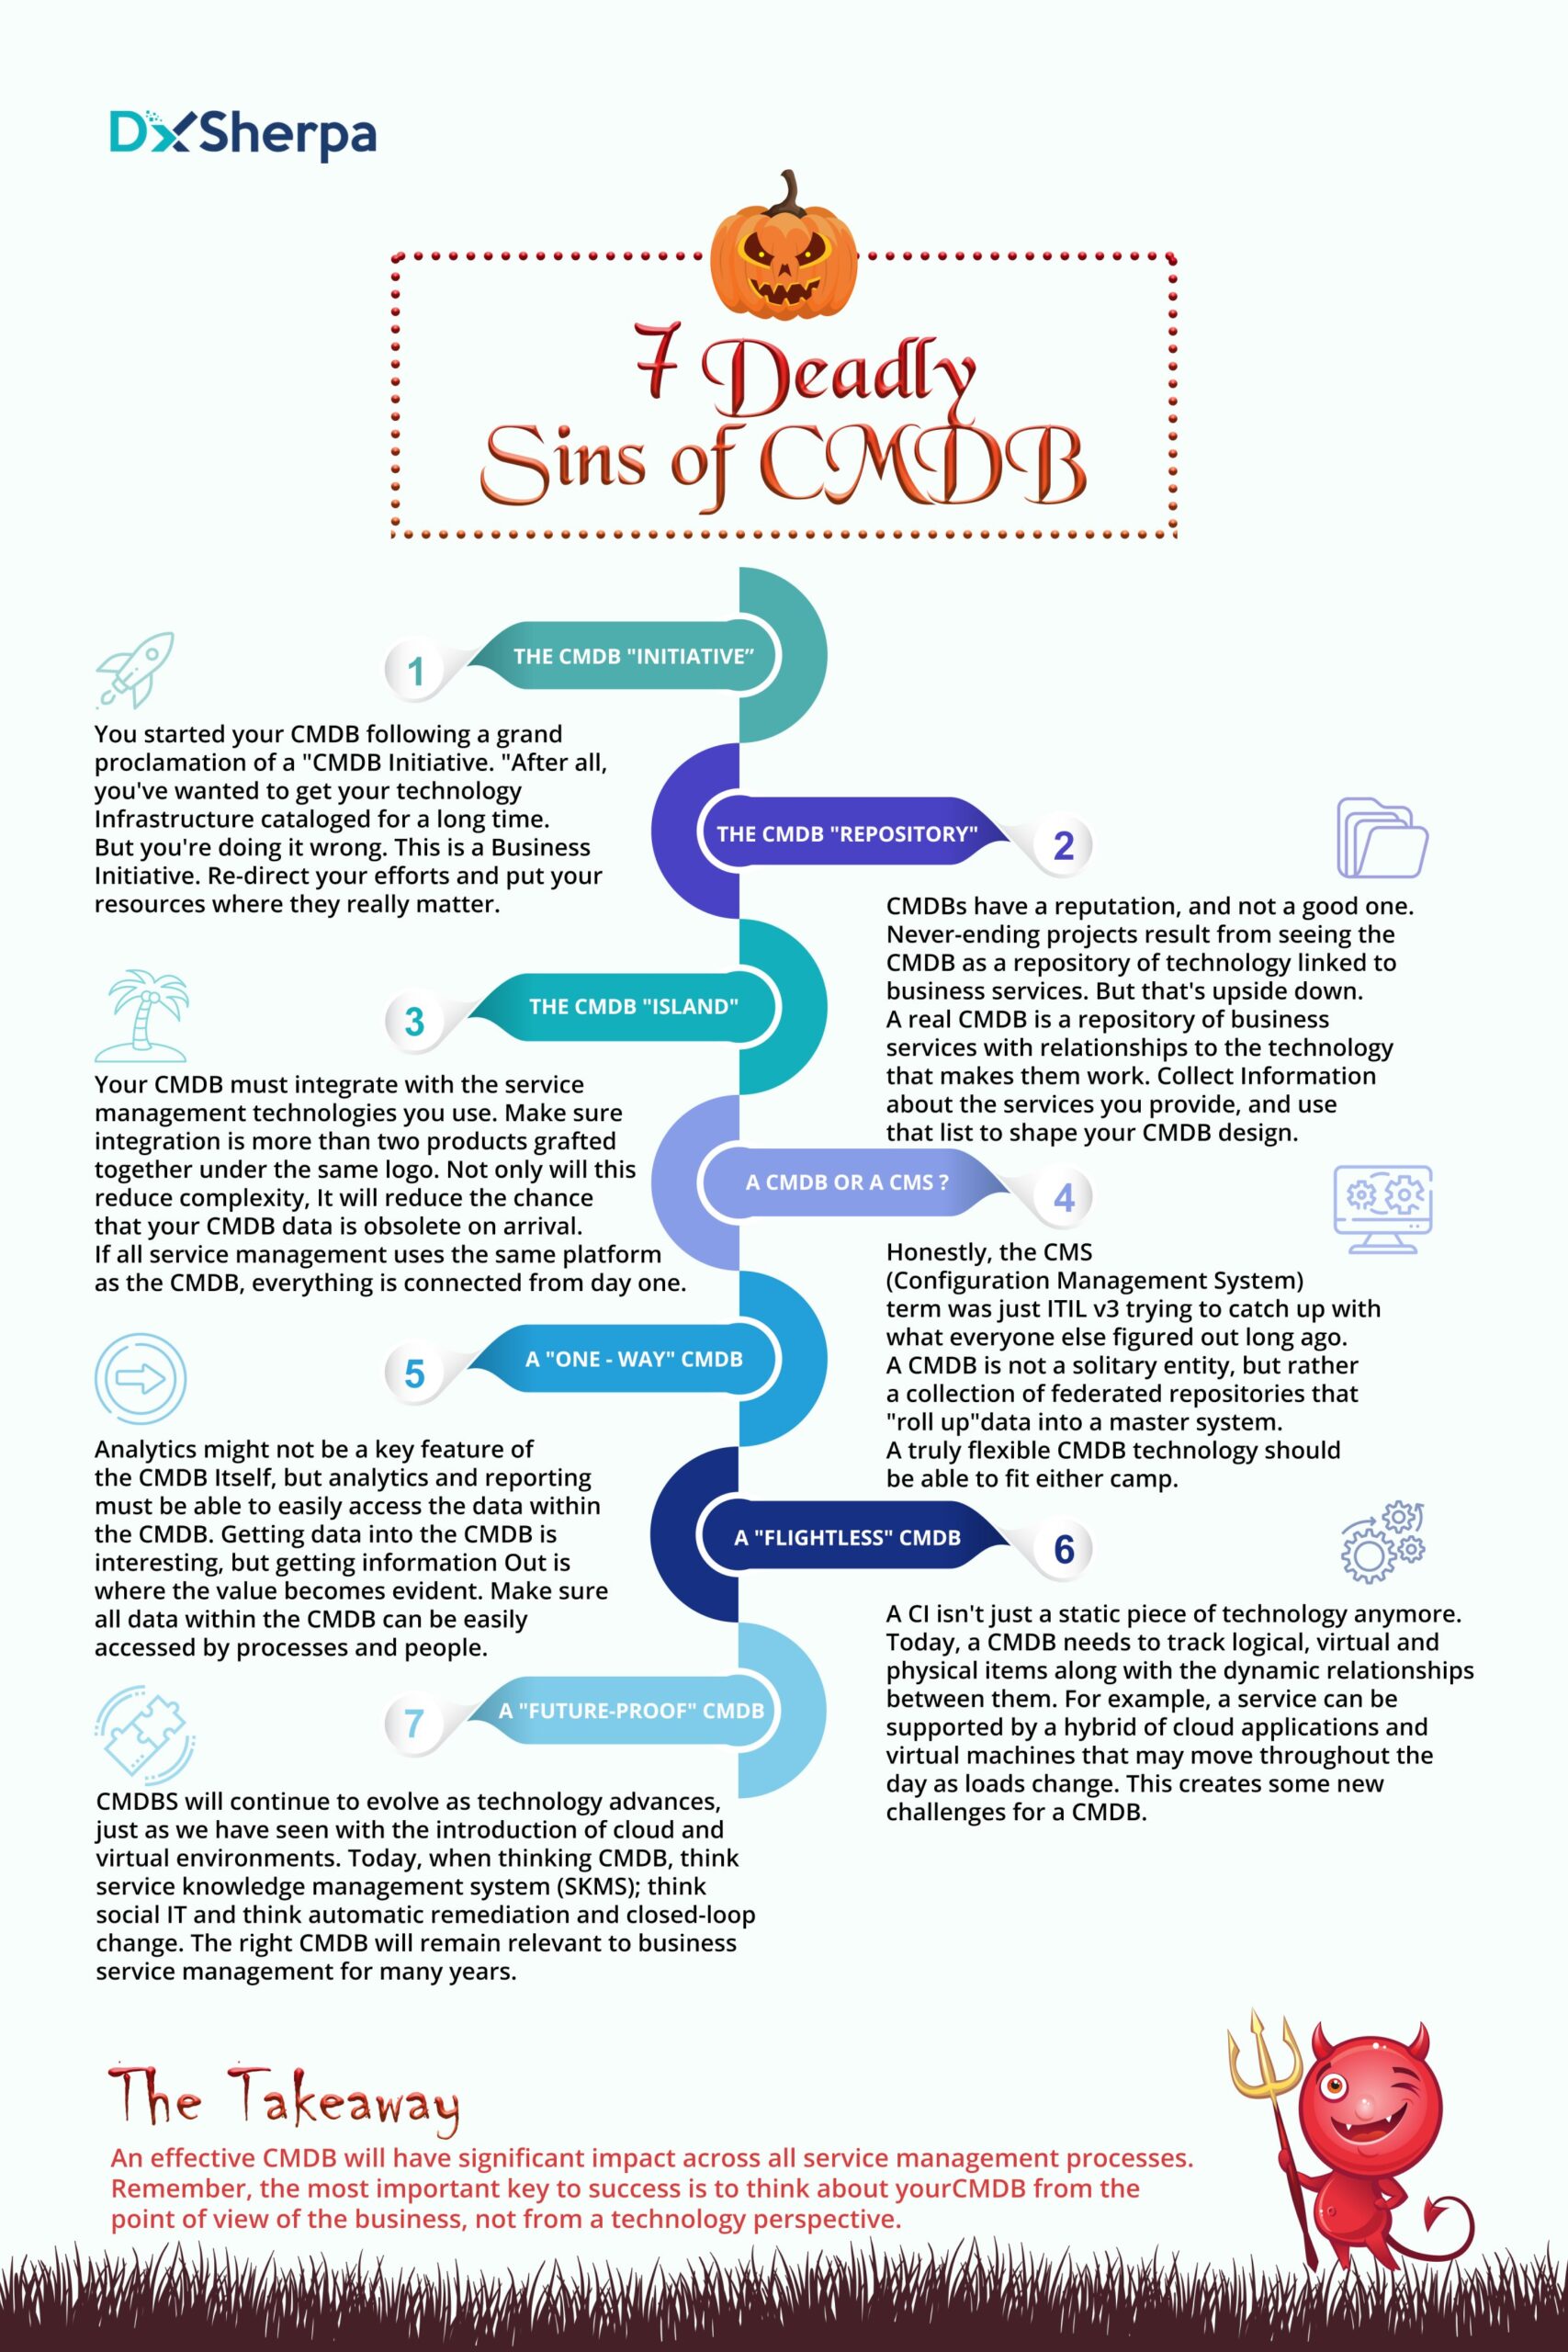 7 Deadly Sins of CMDB